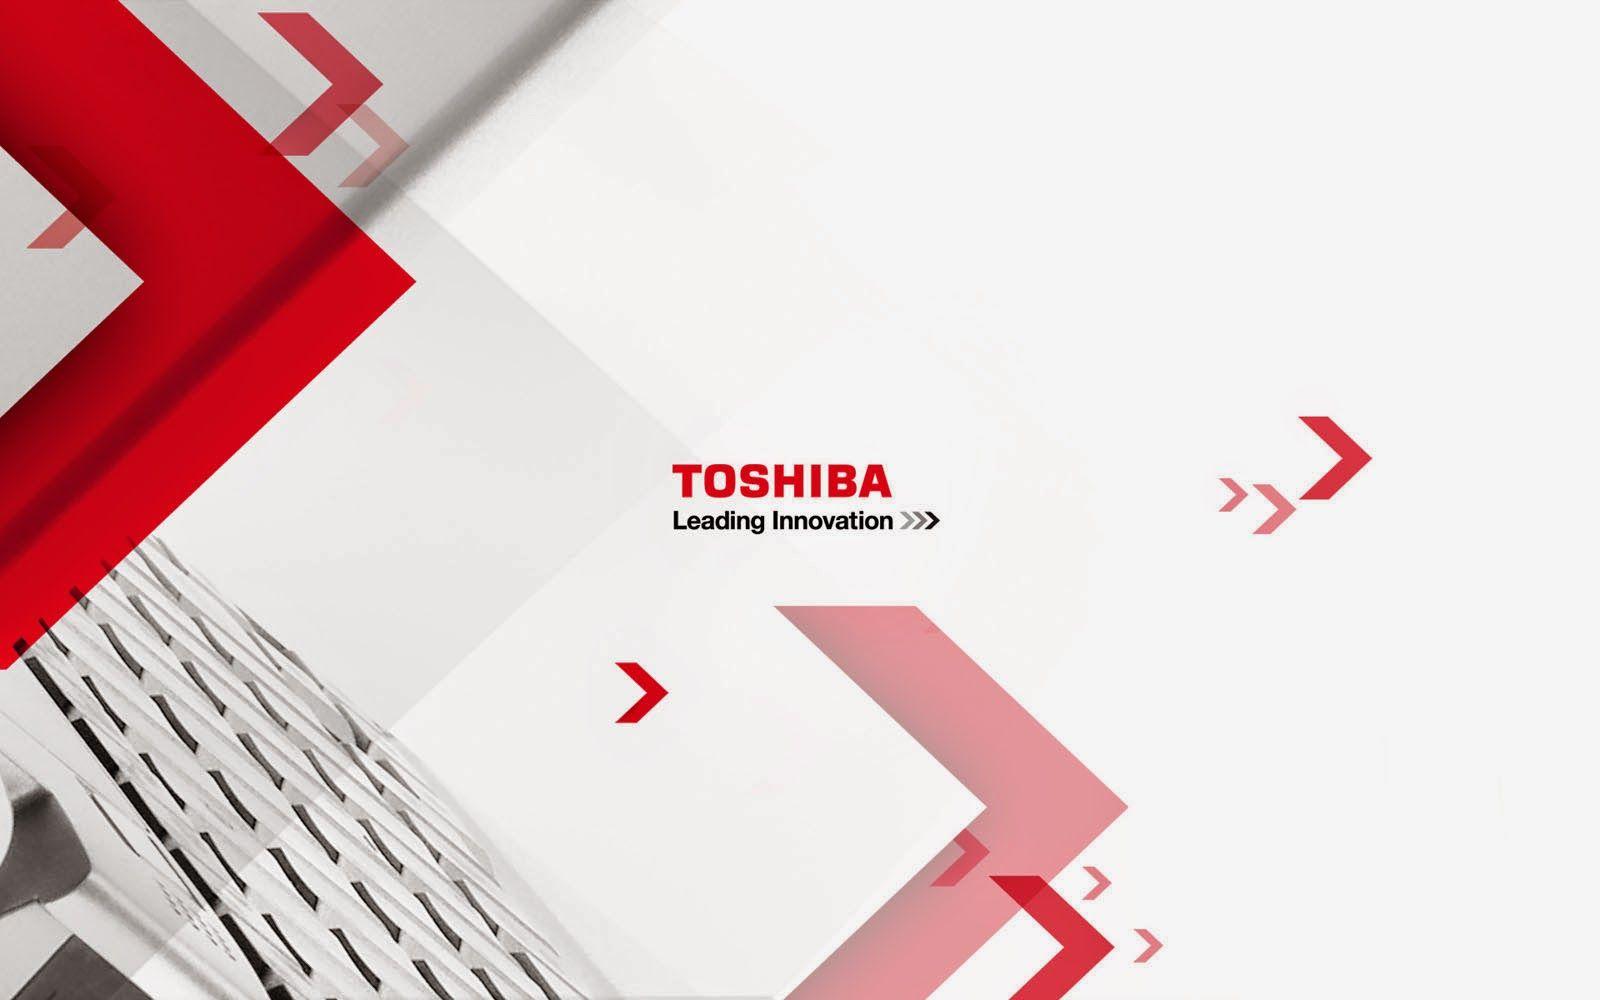 Toshiba Wallpaper, HDQ Beautiful Toshiba Image & Wallpaper